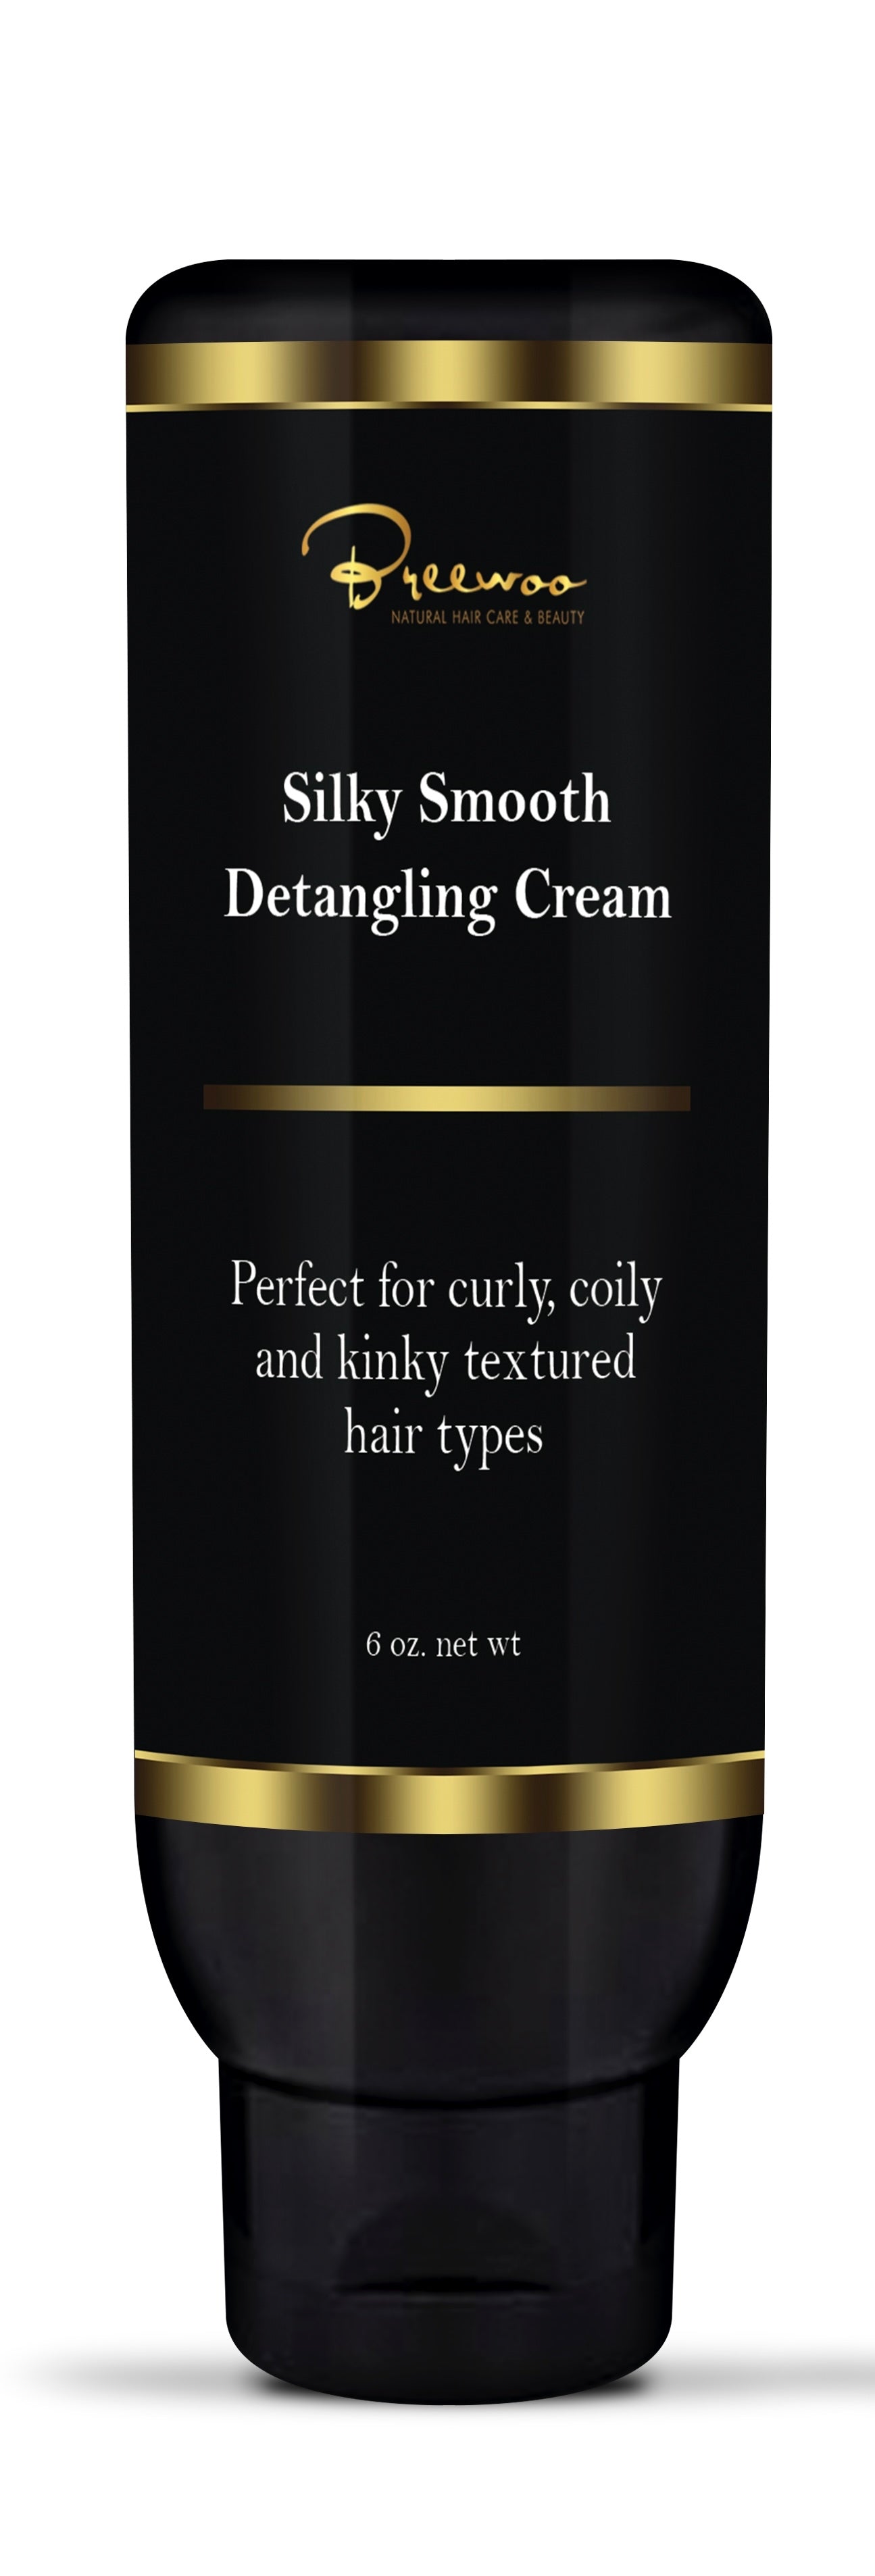 Silky Smooth Detangling Cream